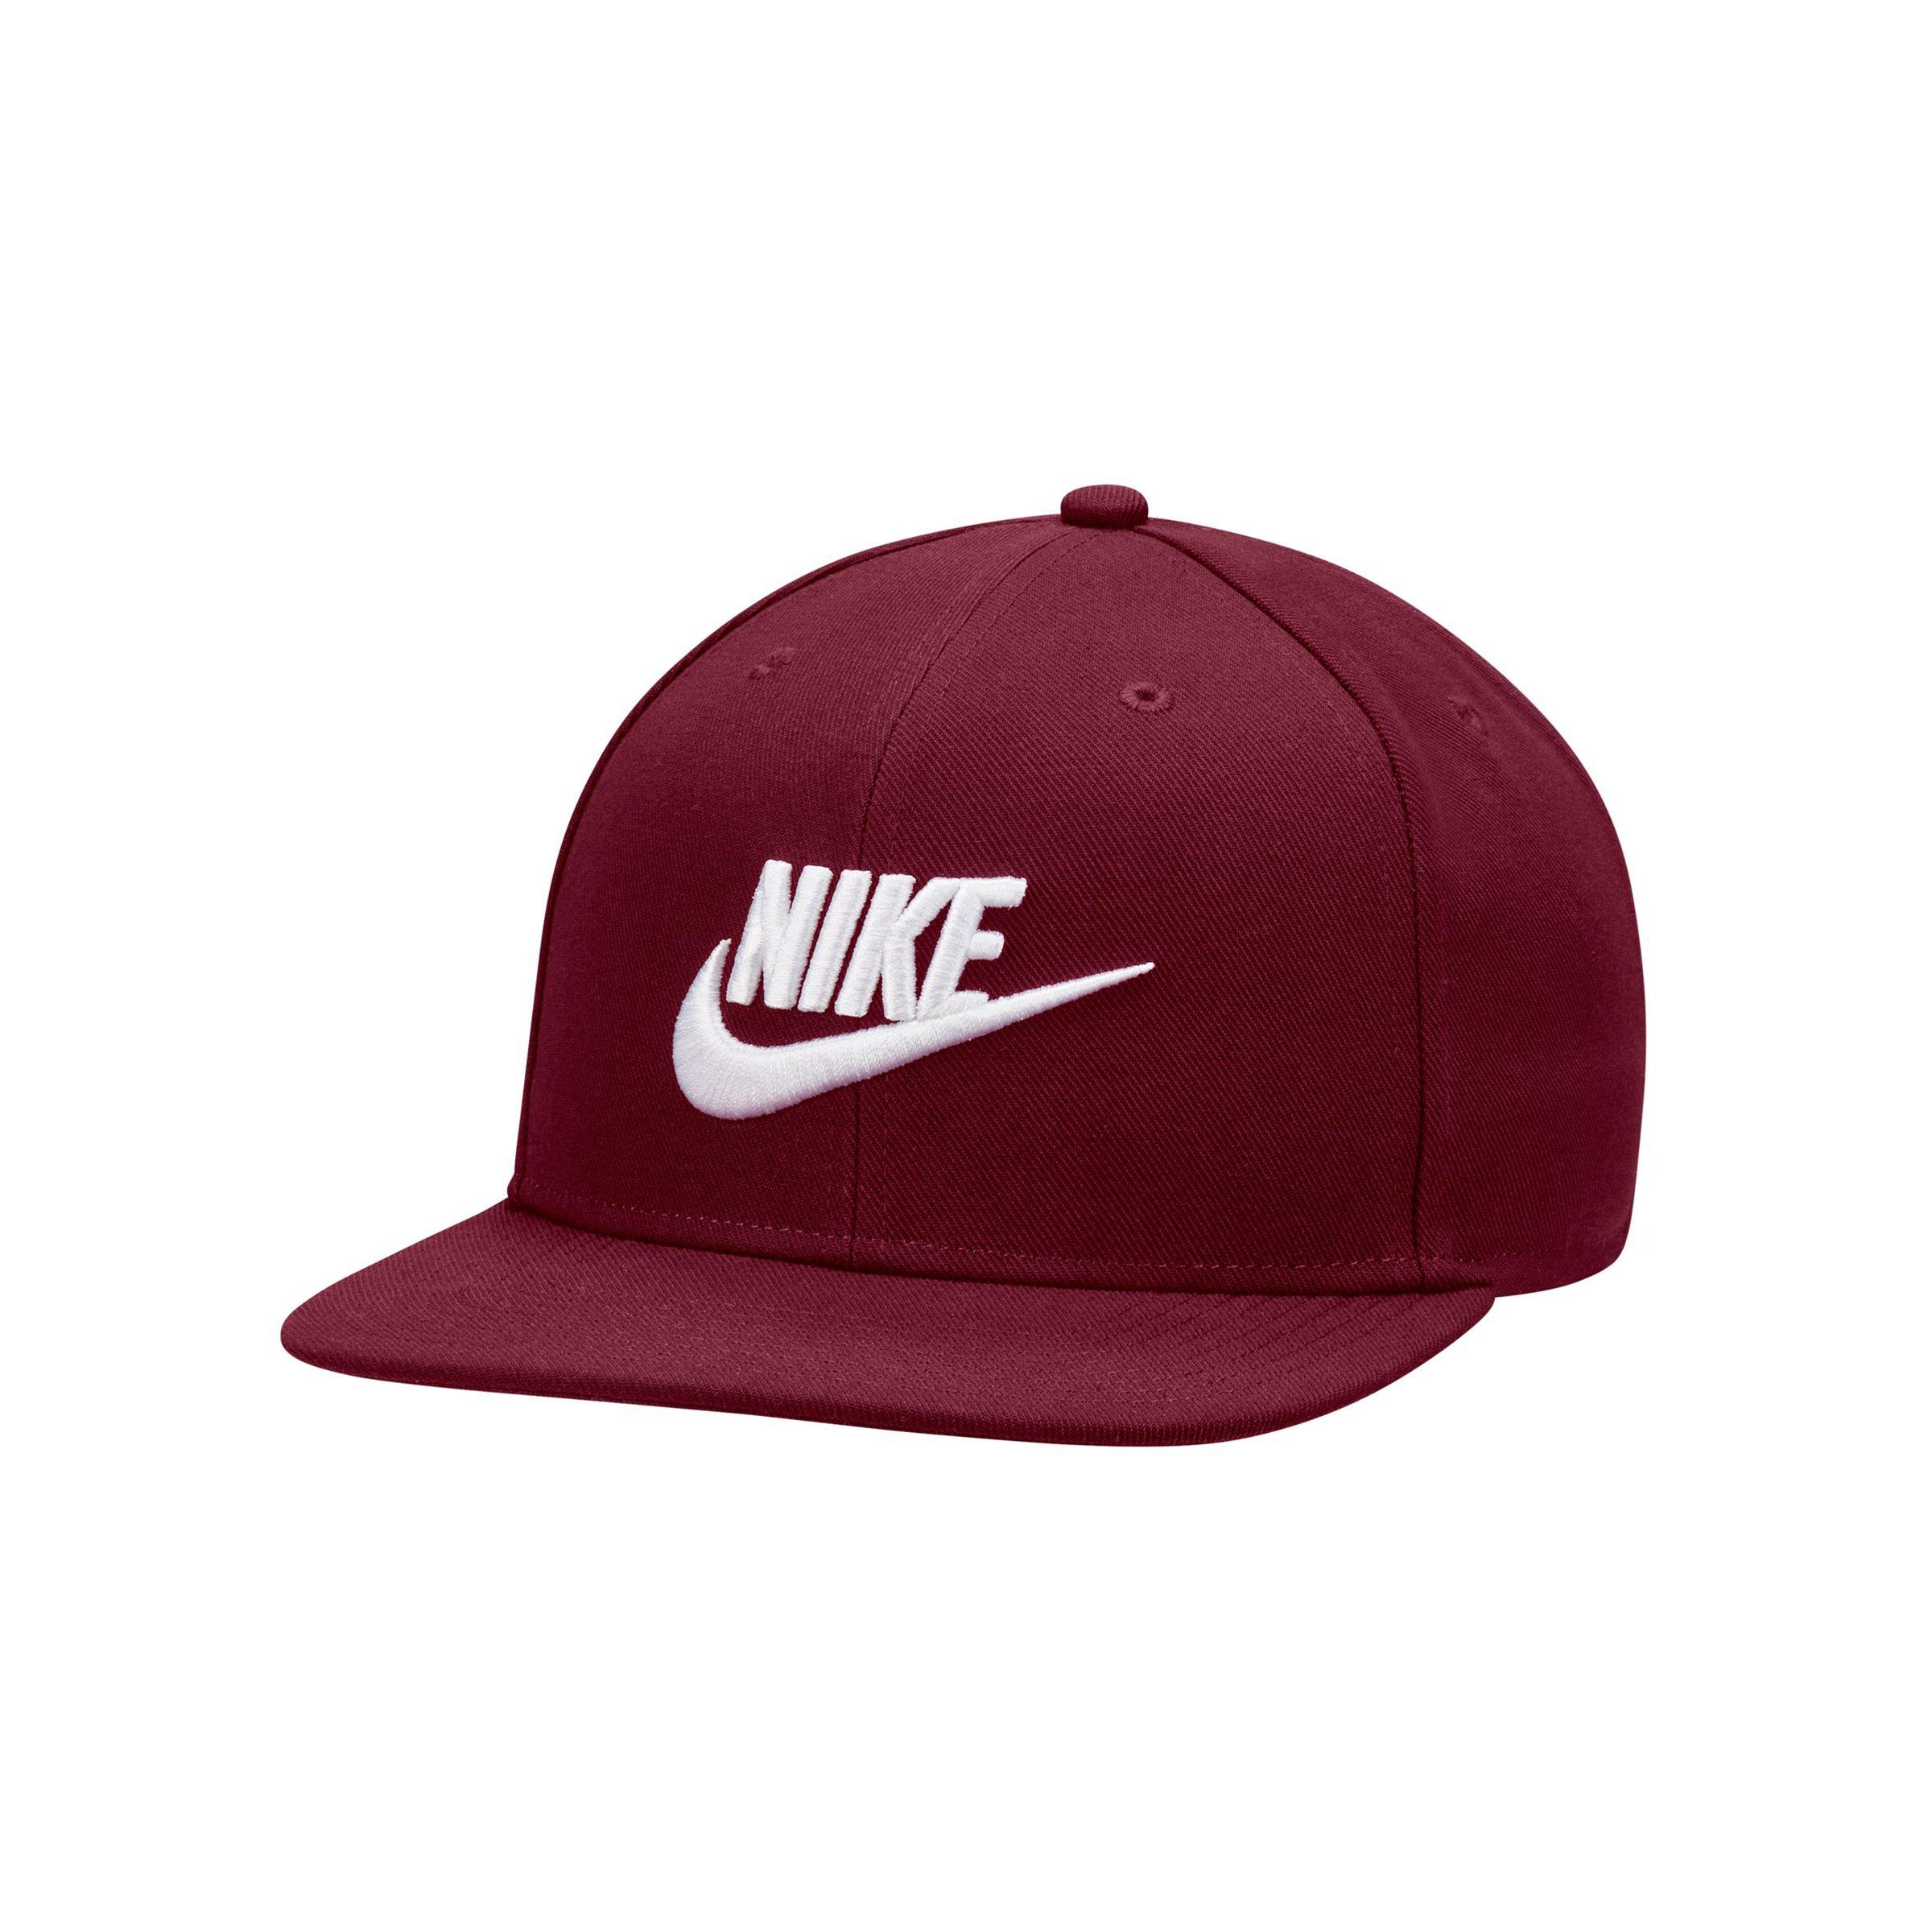 Nike Adjustable Hat - Dark